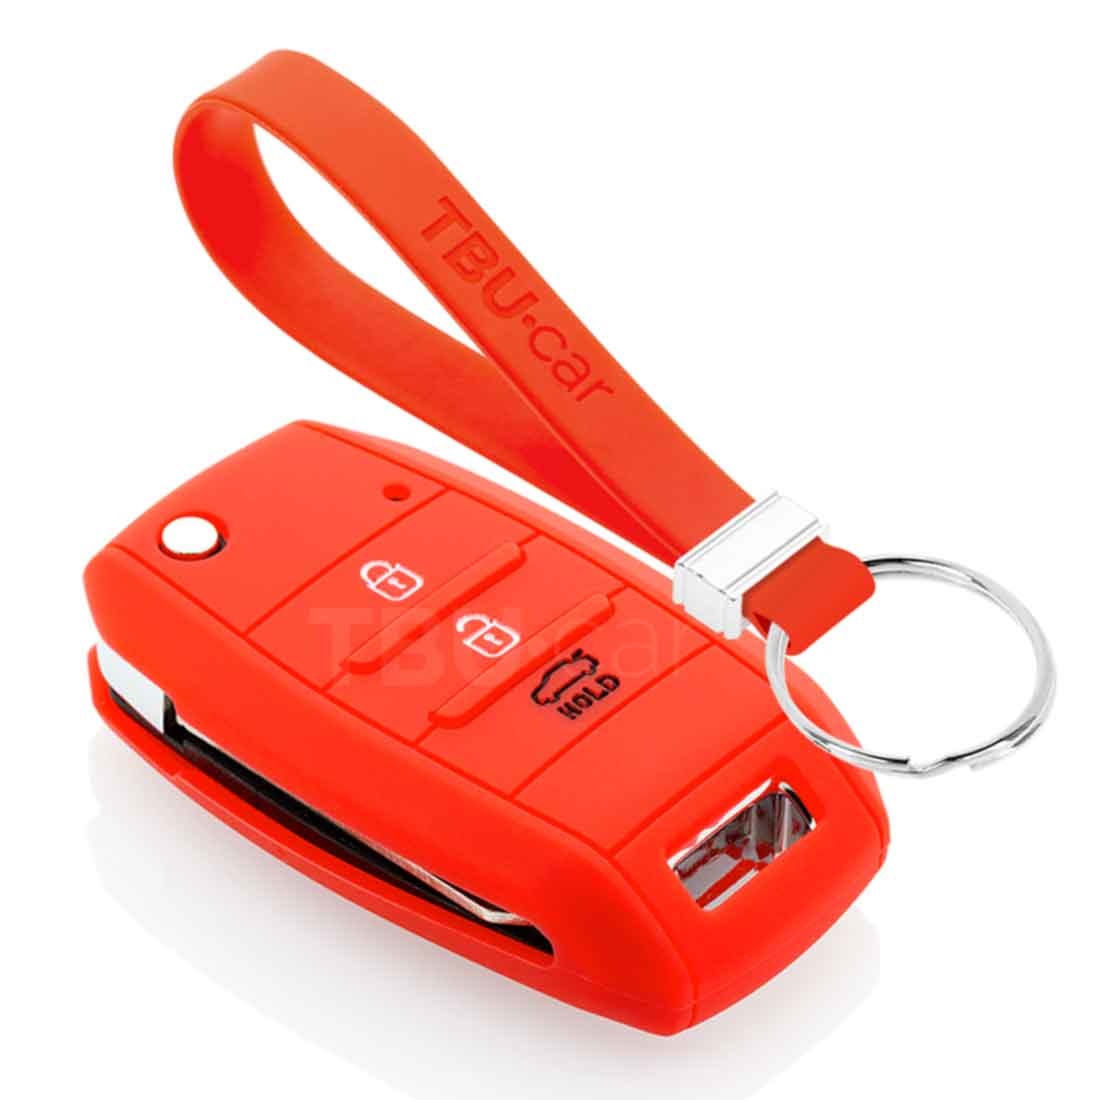 TBU car TBU car Autoschlüssel Hülle kompatibel mit Kia 3 Tasten - Schutzhülle aus Silikon - Auto Schlüsselhülle Cover in Rot